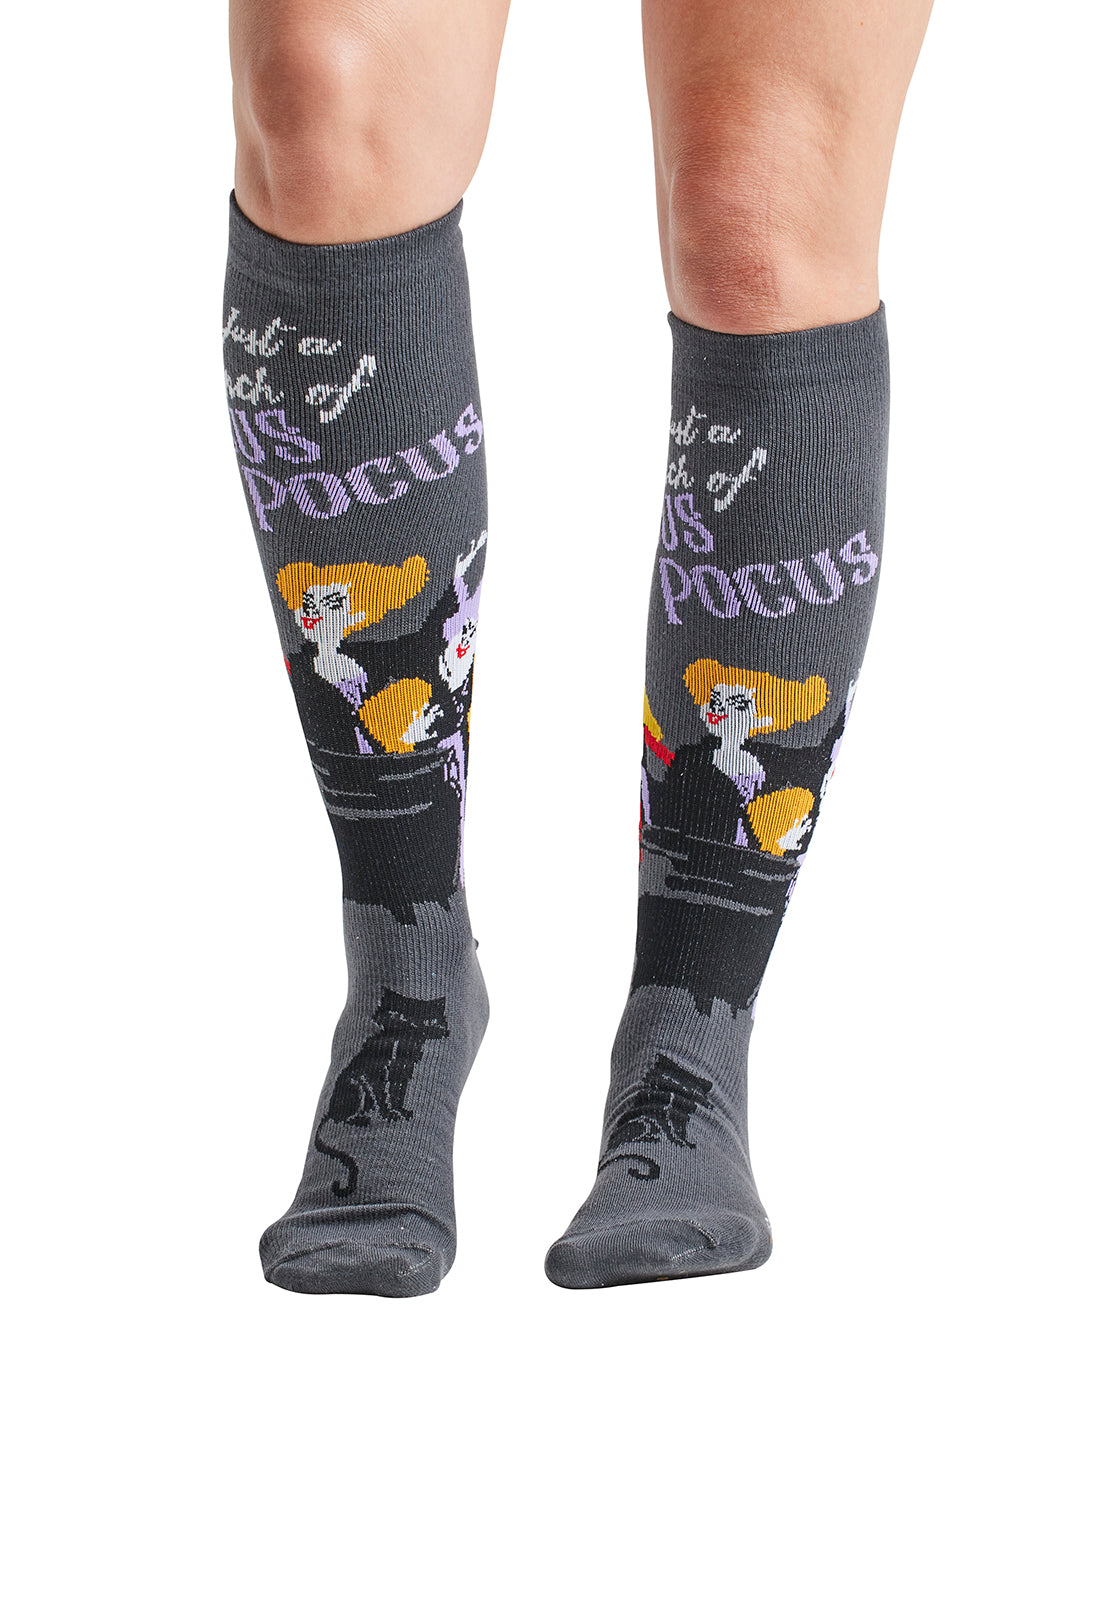 Compression Socks with Disney Prints Compression Socks Cherokee Legwear Spellbinding  